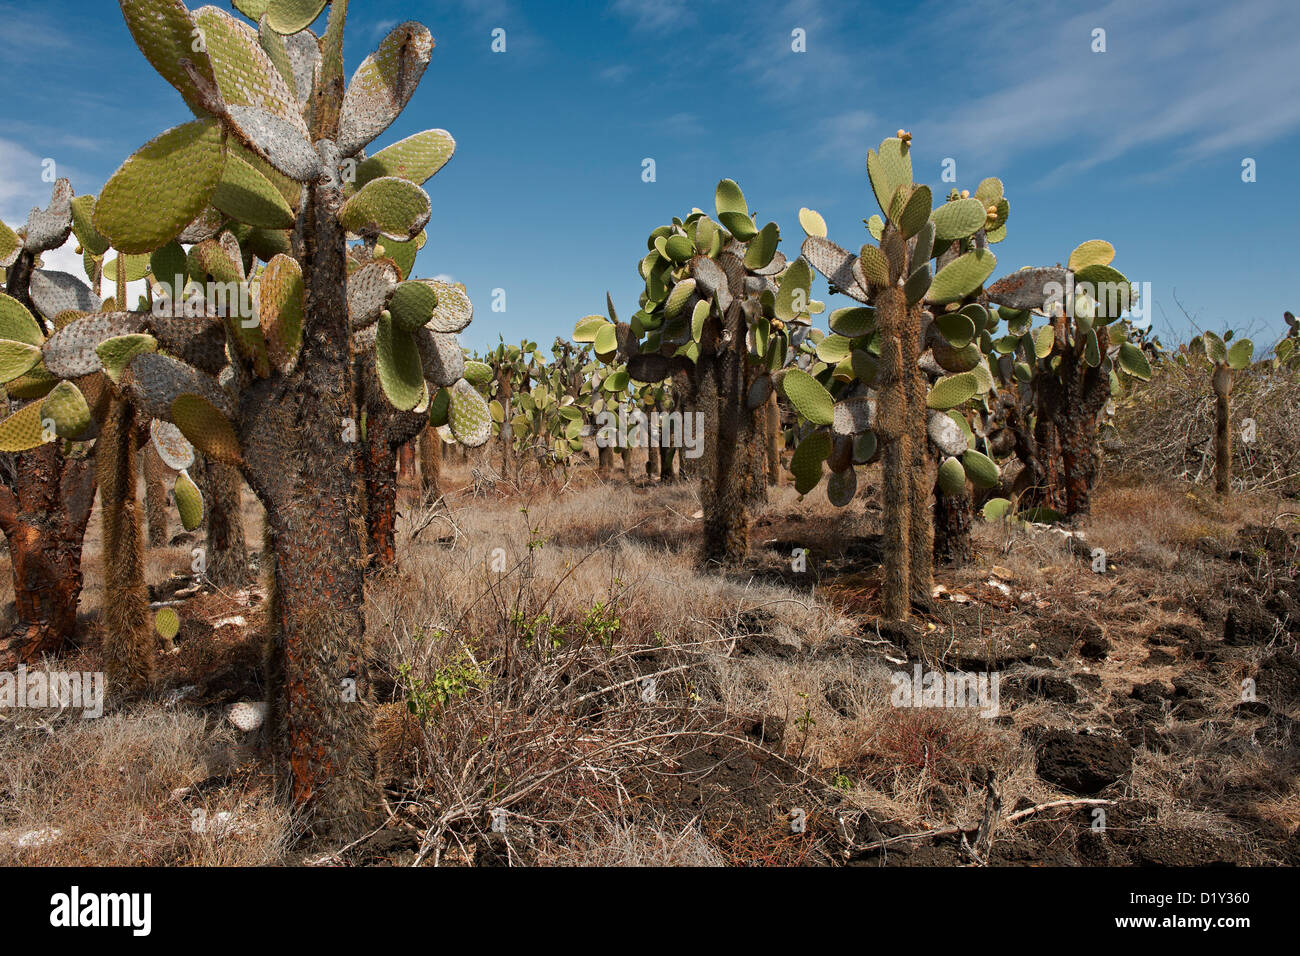 Galapagos giant cactus, Opuntia echios gigantea, endemic and only species like tree, Tortuga Bay, Puerto Ayora, Galapagos Stock Photo